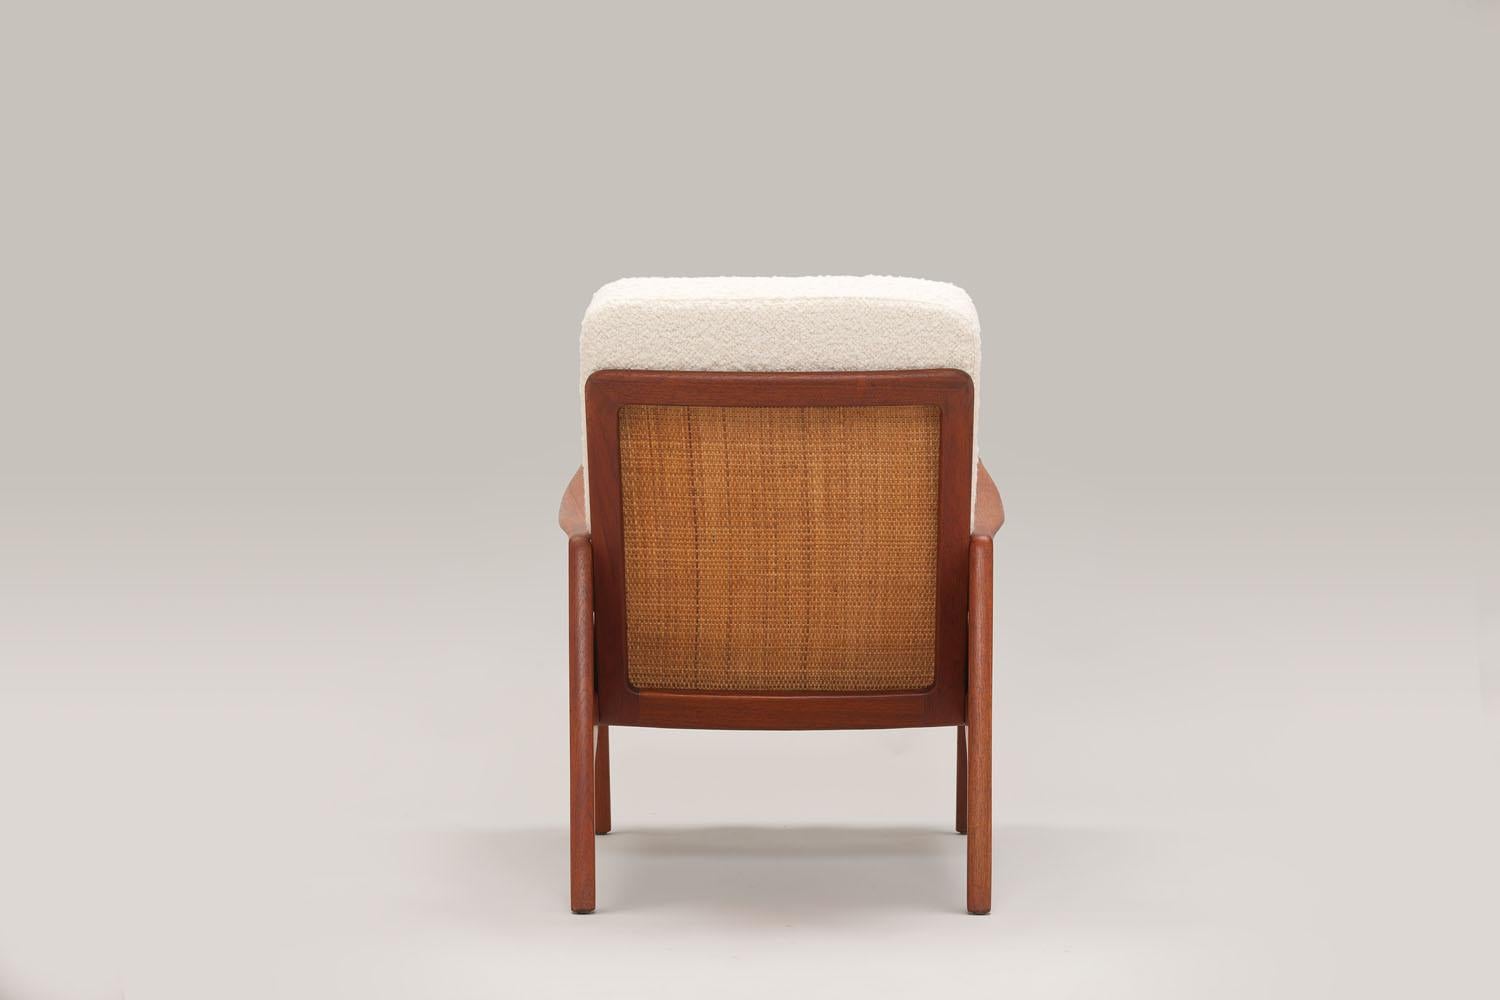 Hand-Woven Pair of Cane & Teak FD-151 Chairs by Peter Hvidt & Orla Mølgaard-Nielsen, 1956